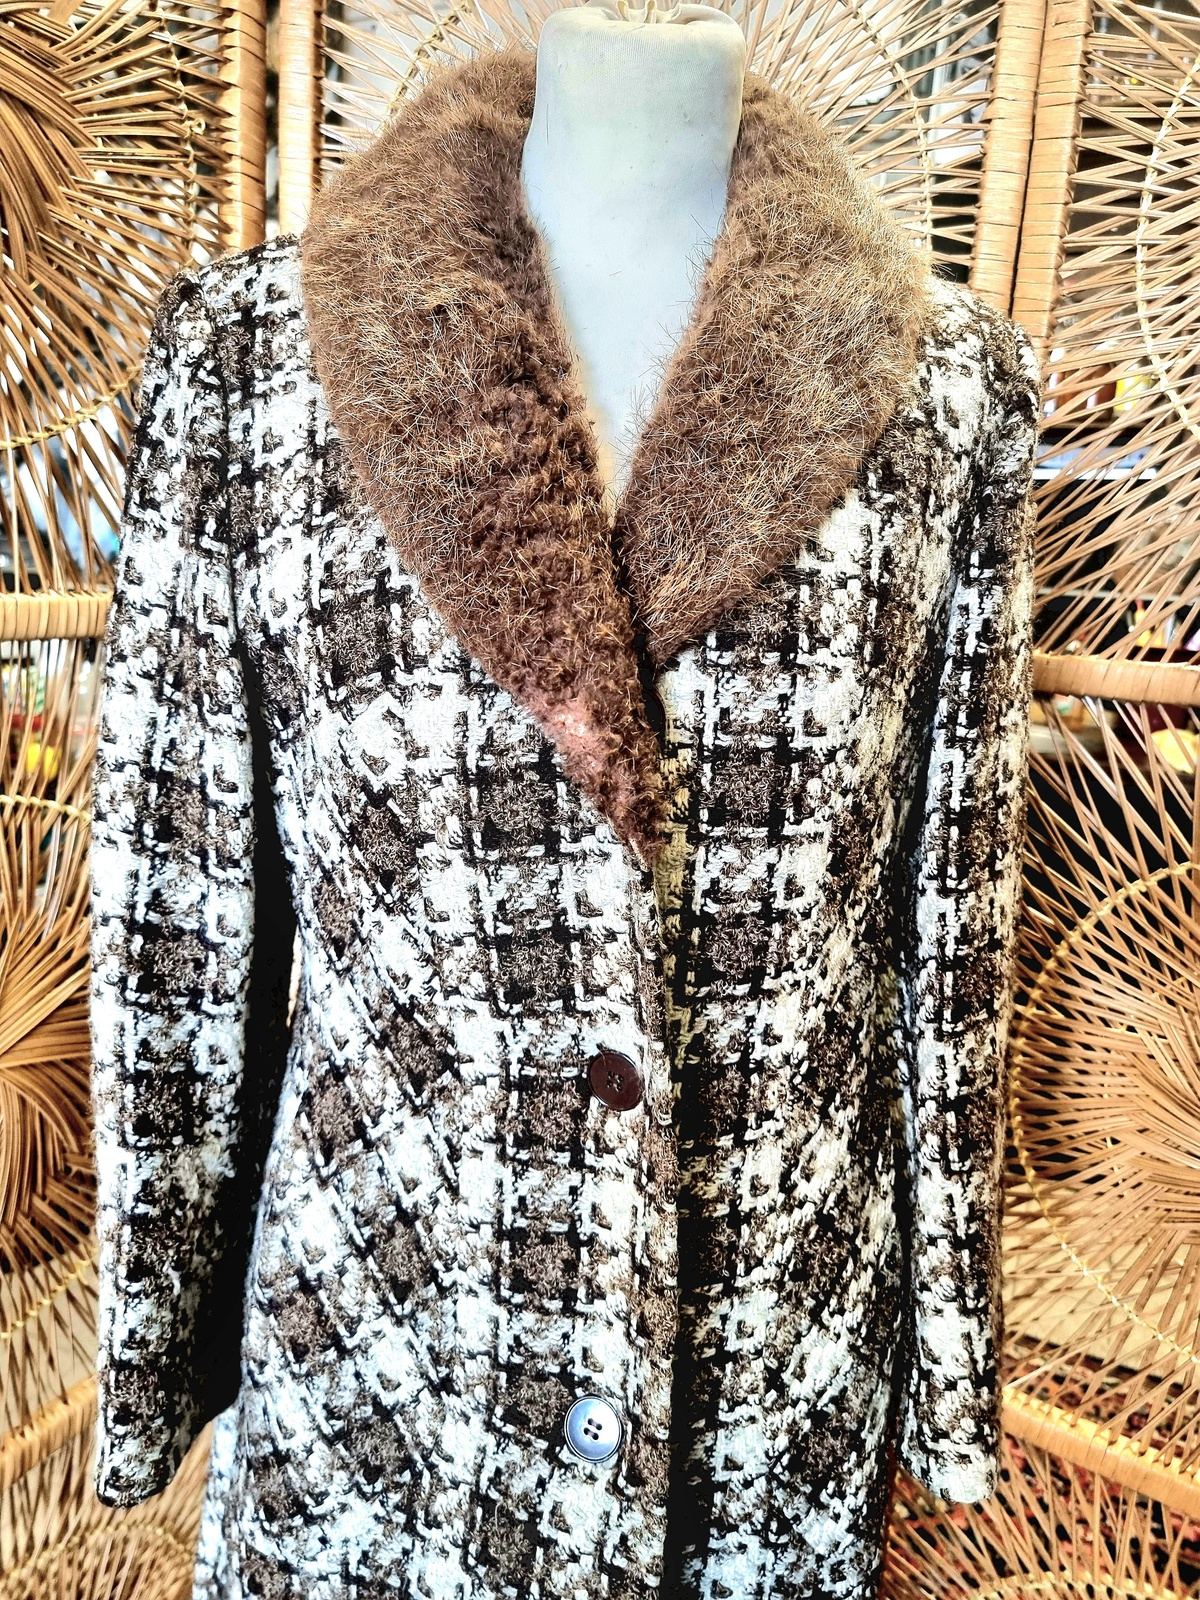 Vintage Asa Coat